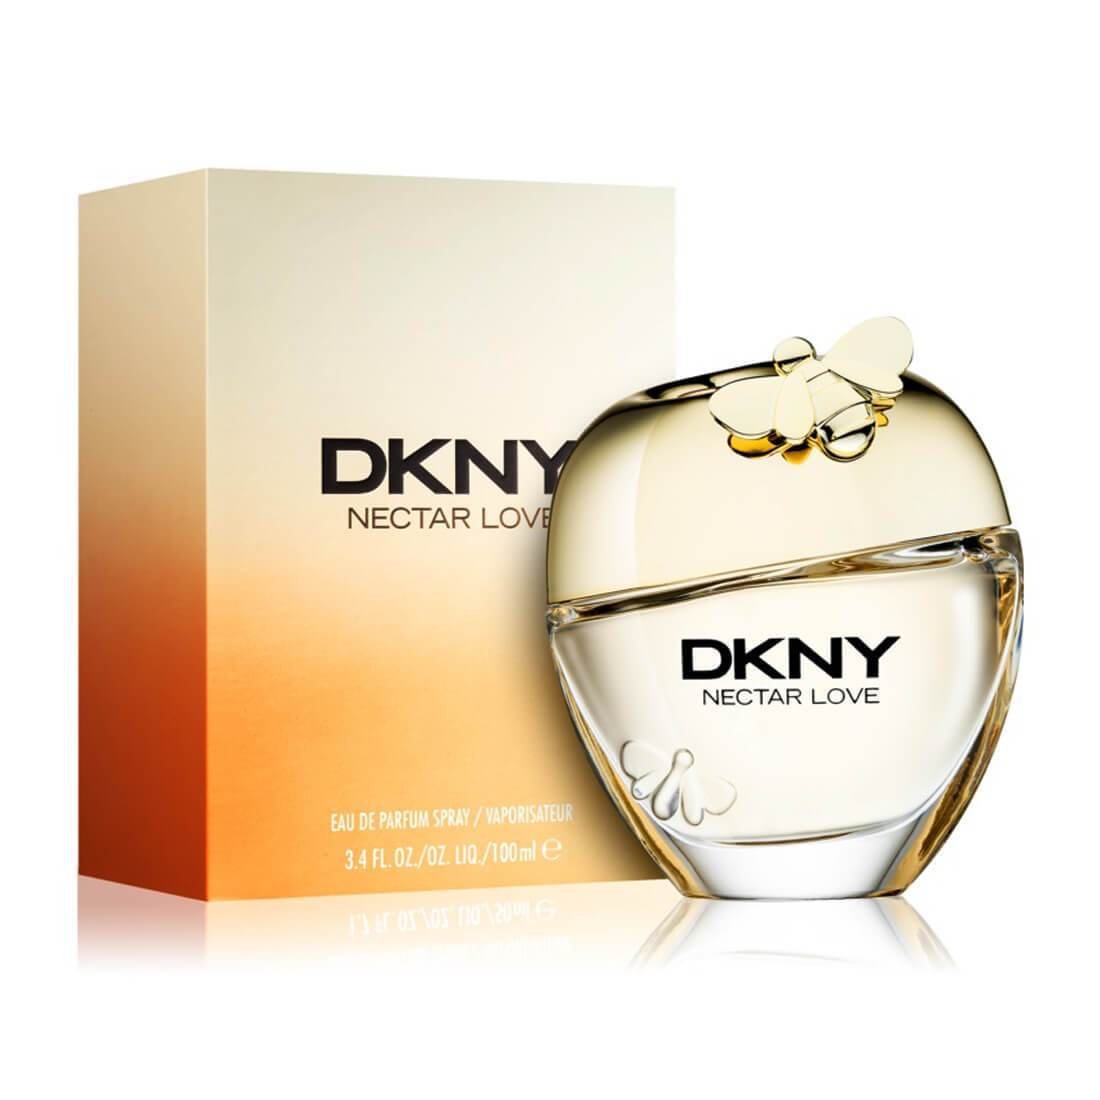 Dkny Nectar Love Eau De Parfum For Women